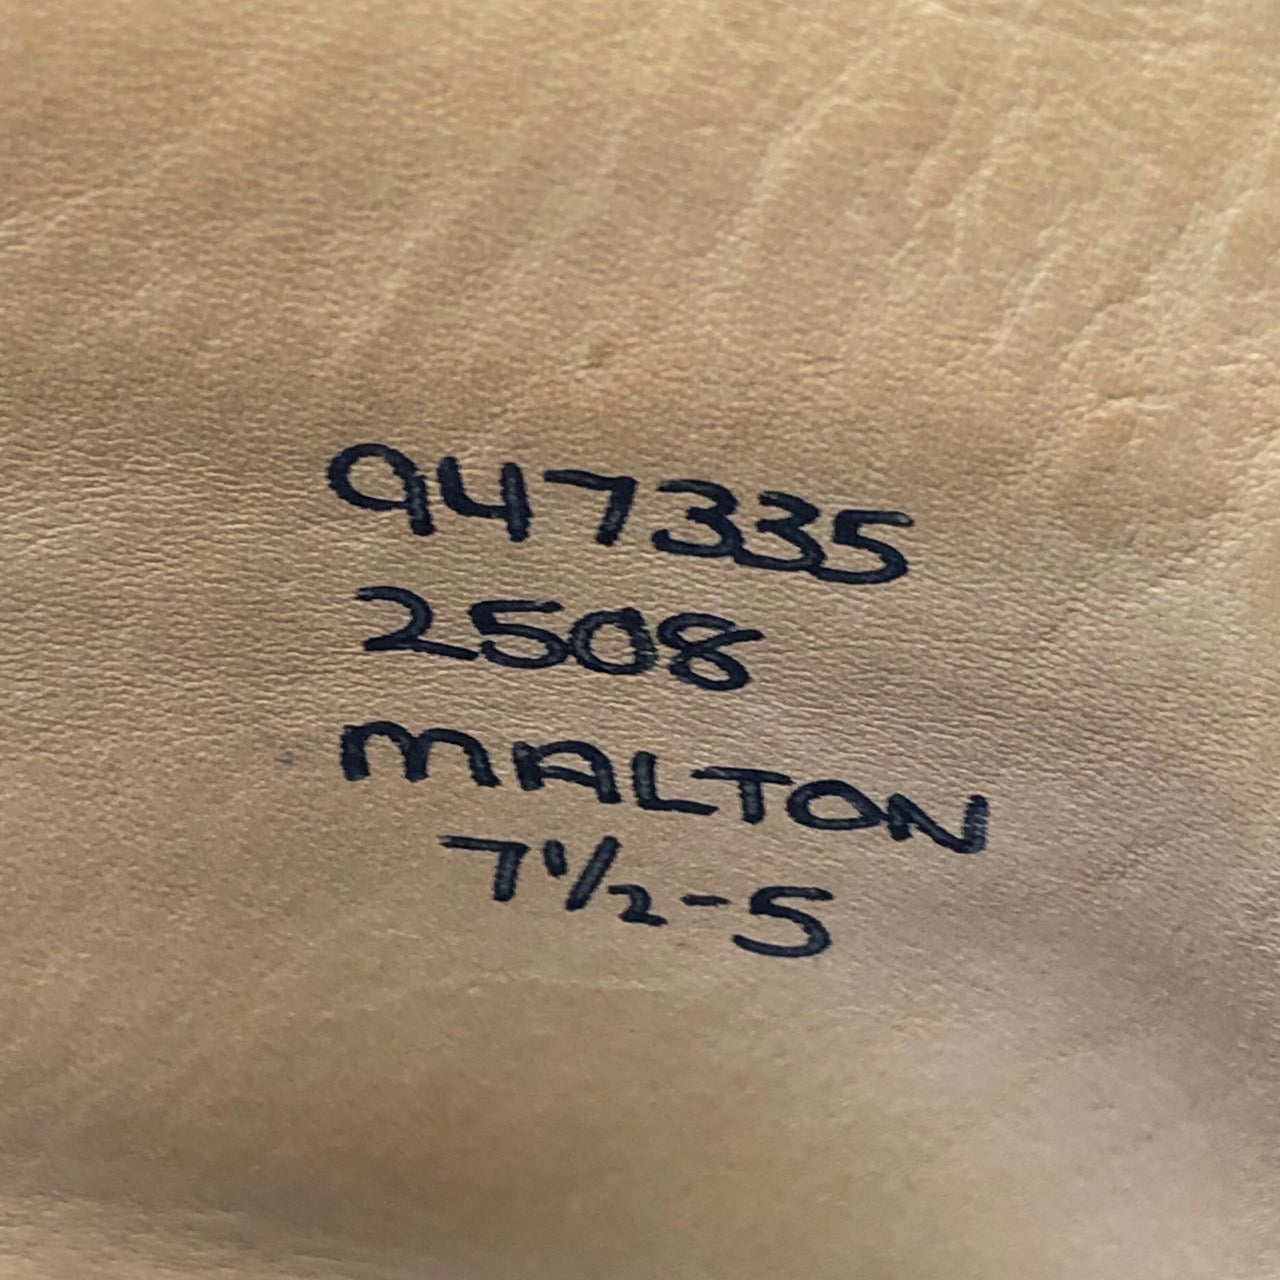 Tricker's(トリッカーズ) カントリーブーツ/MALTON(モールトン) 2508 UK7 1/2(26.5cm程度) ブラック